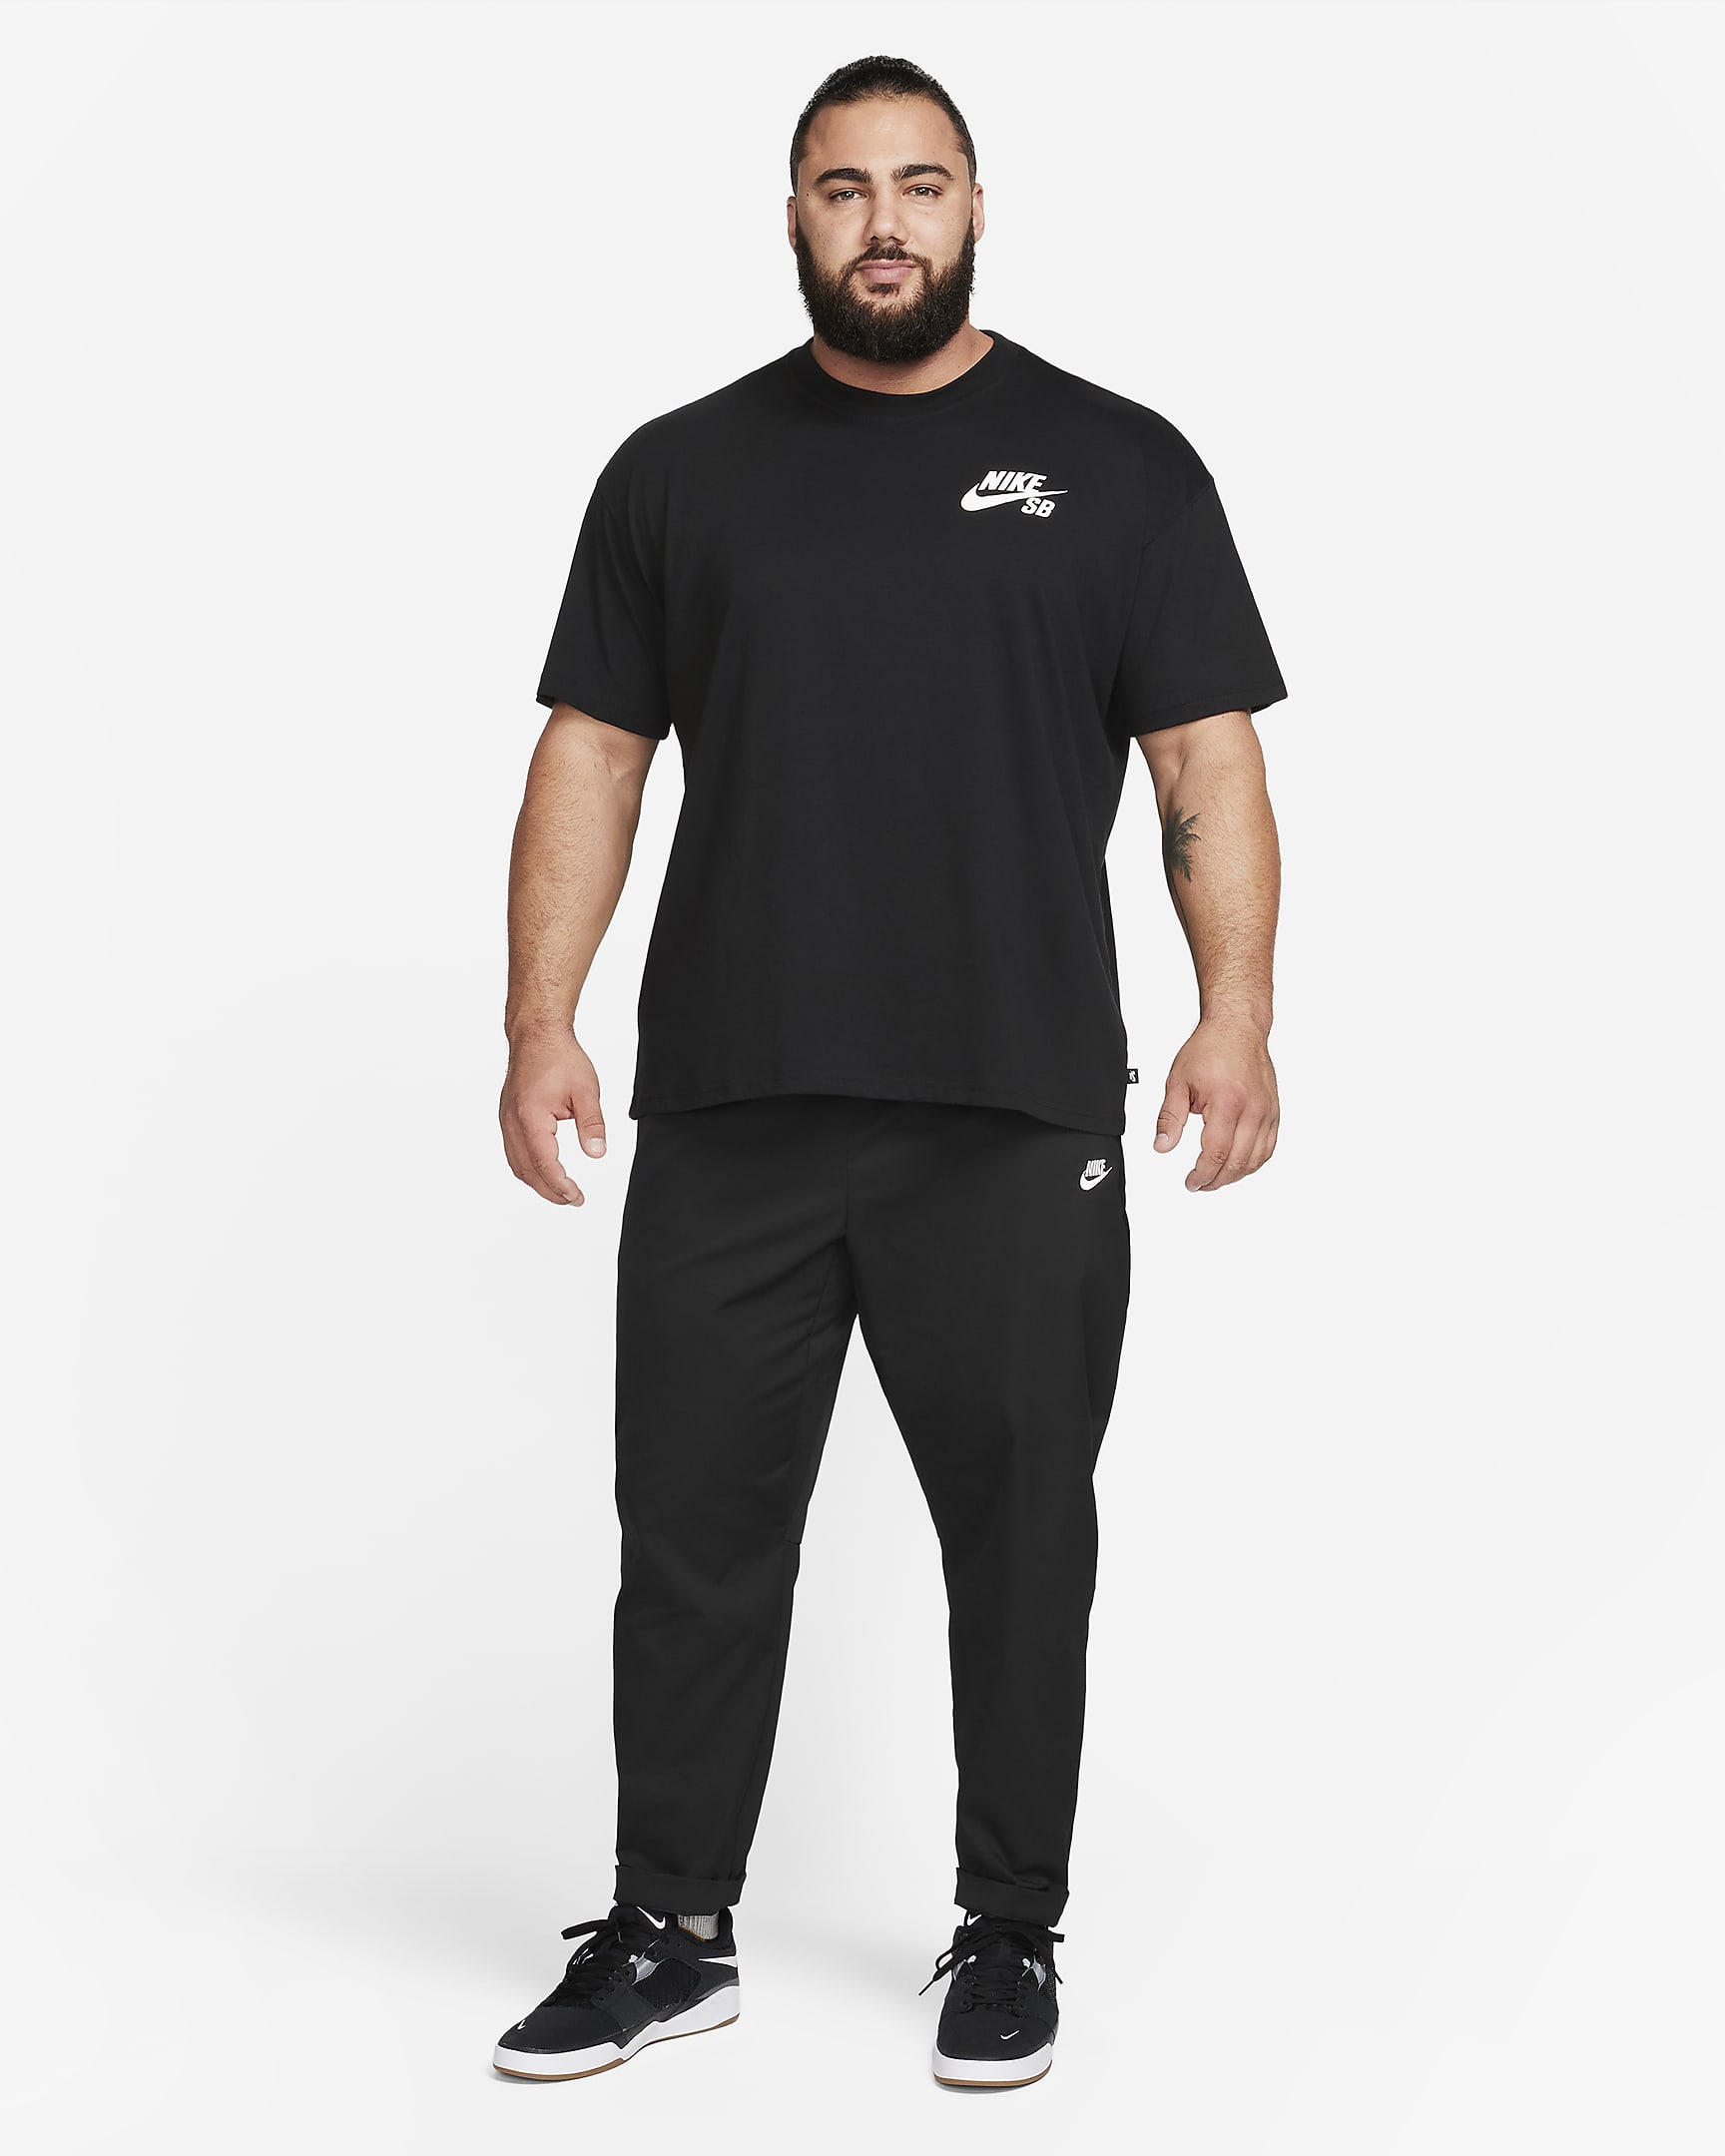 T-shirt de skateboard à logo Nike SB - Noir/Blanc